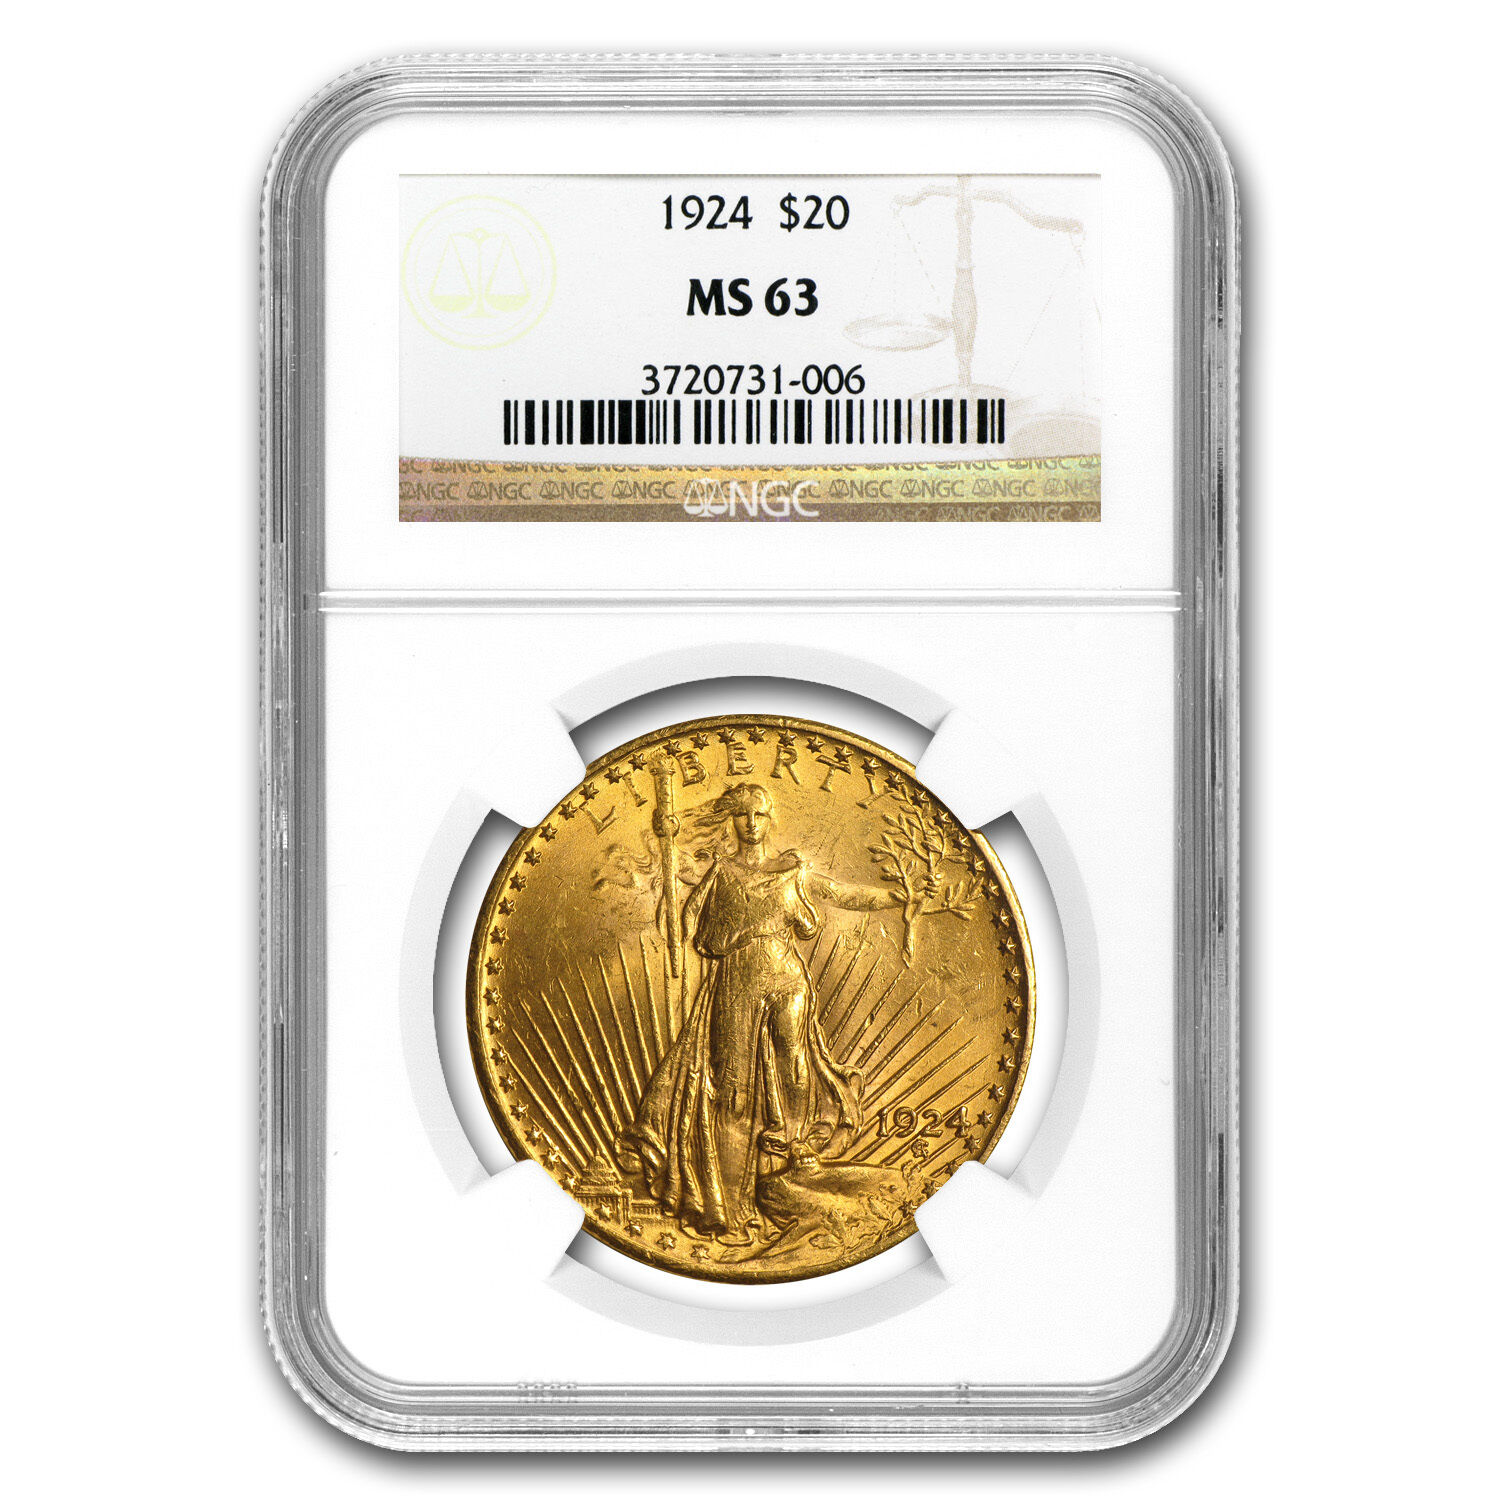 $20 Saint-Gaudens Double Eagle Gold Coin - Random Year - MS-63 NGC - SKU #123